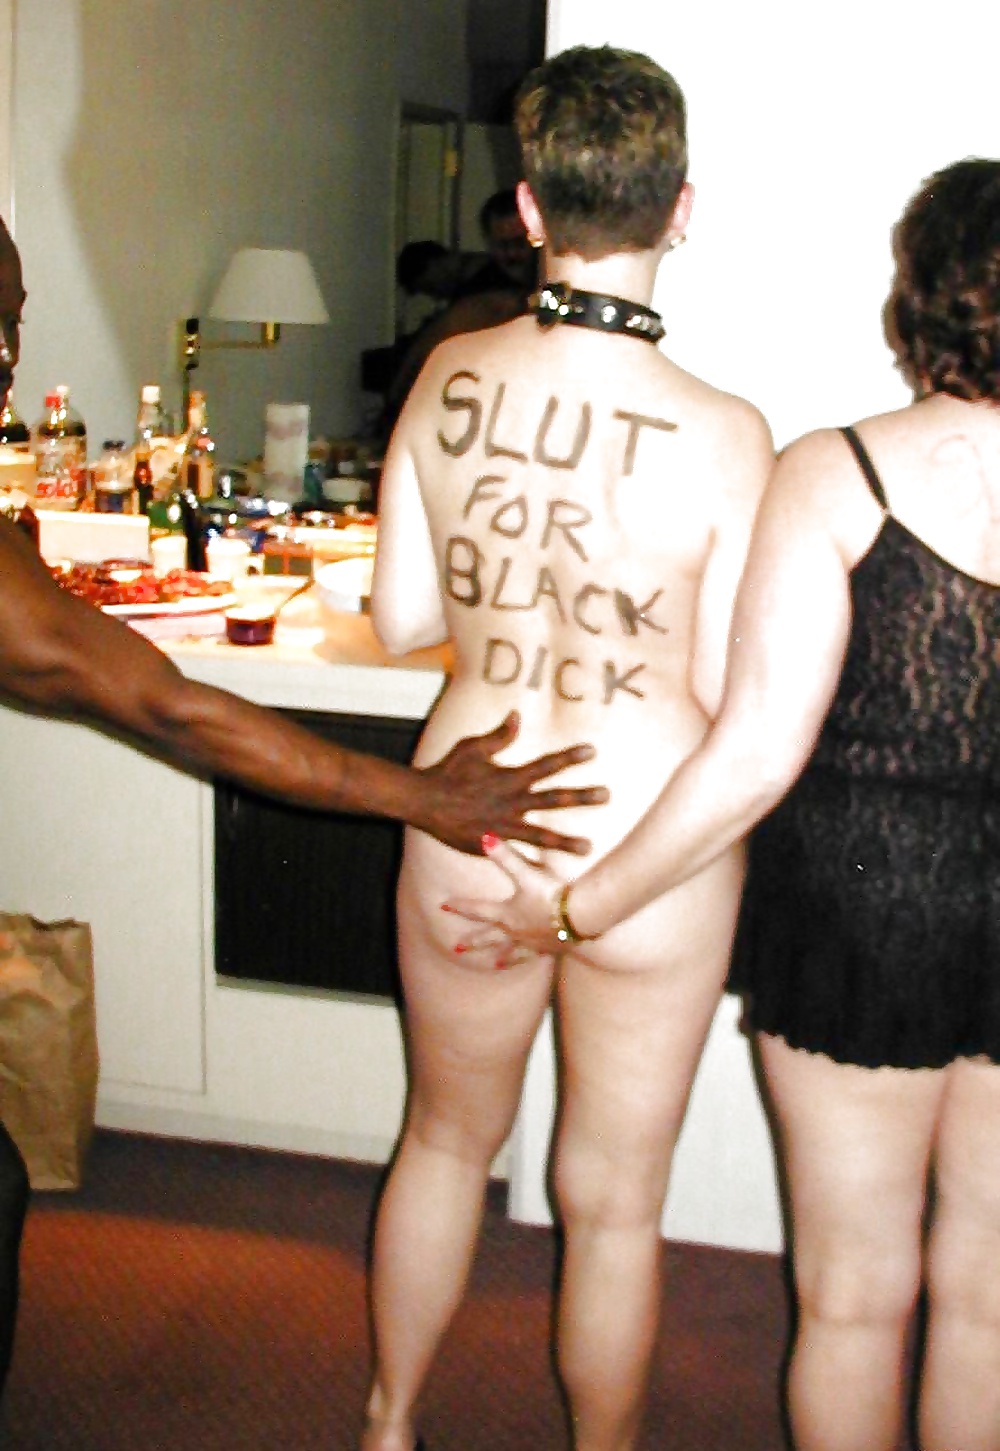 Older women group of Black Cock sluts adult photos